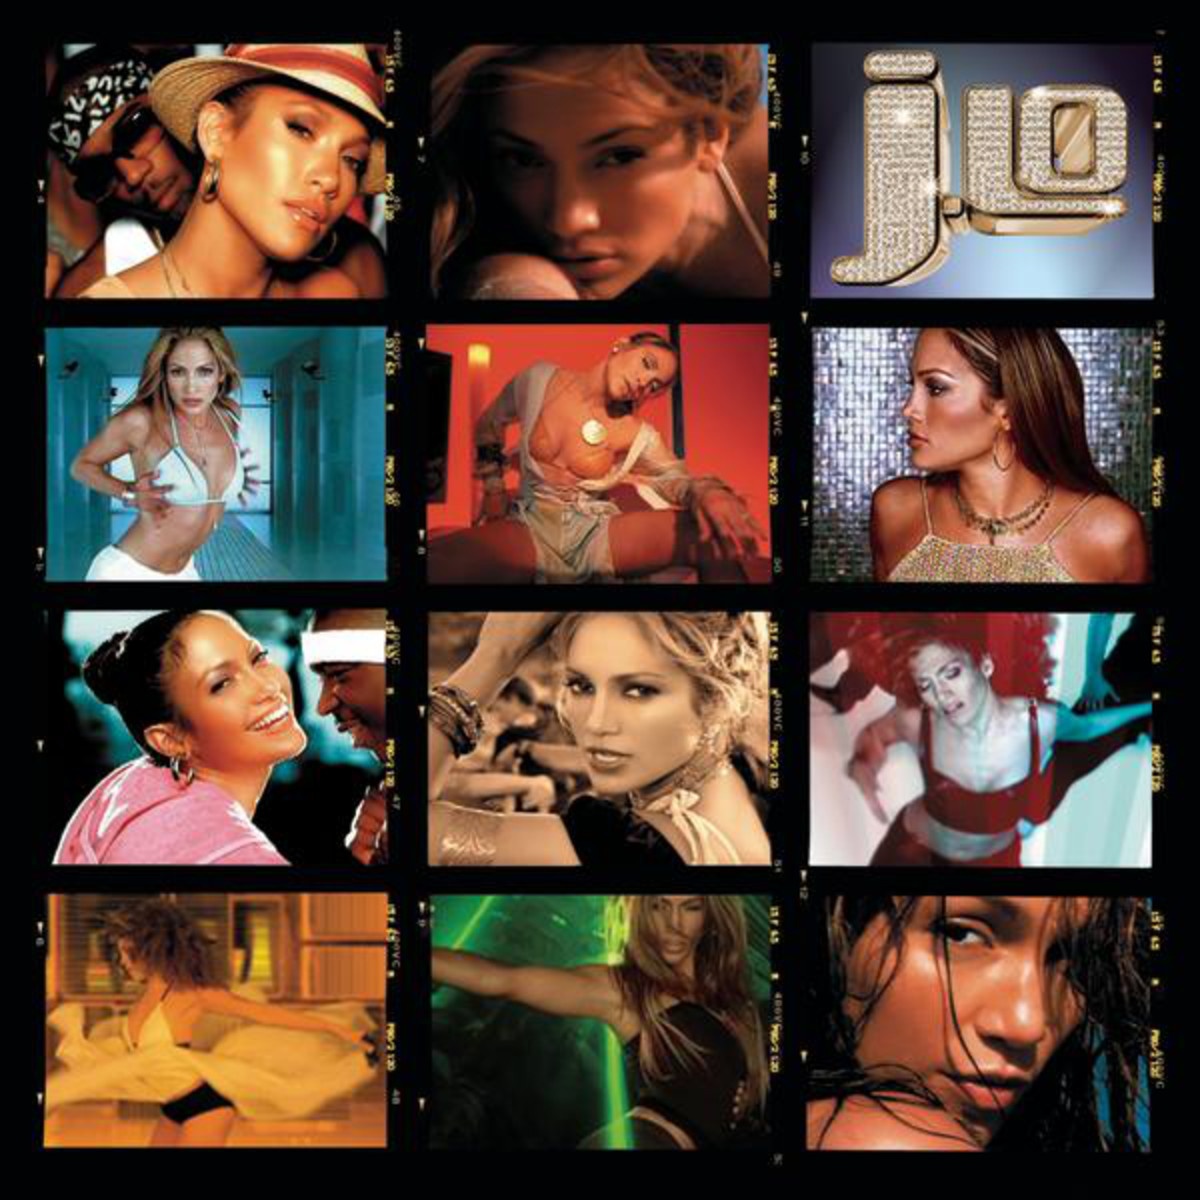 J To Tha L-O! The Remixes (Explicit Version)